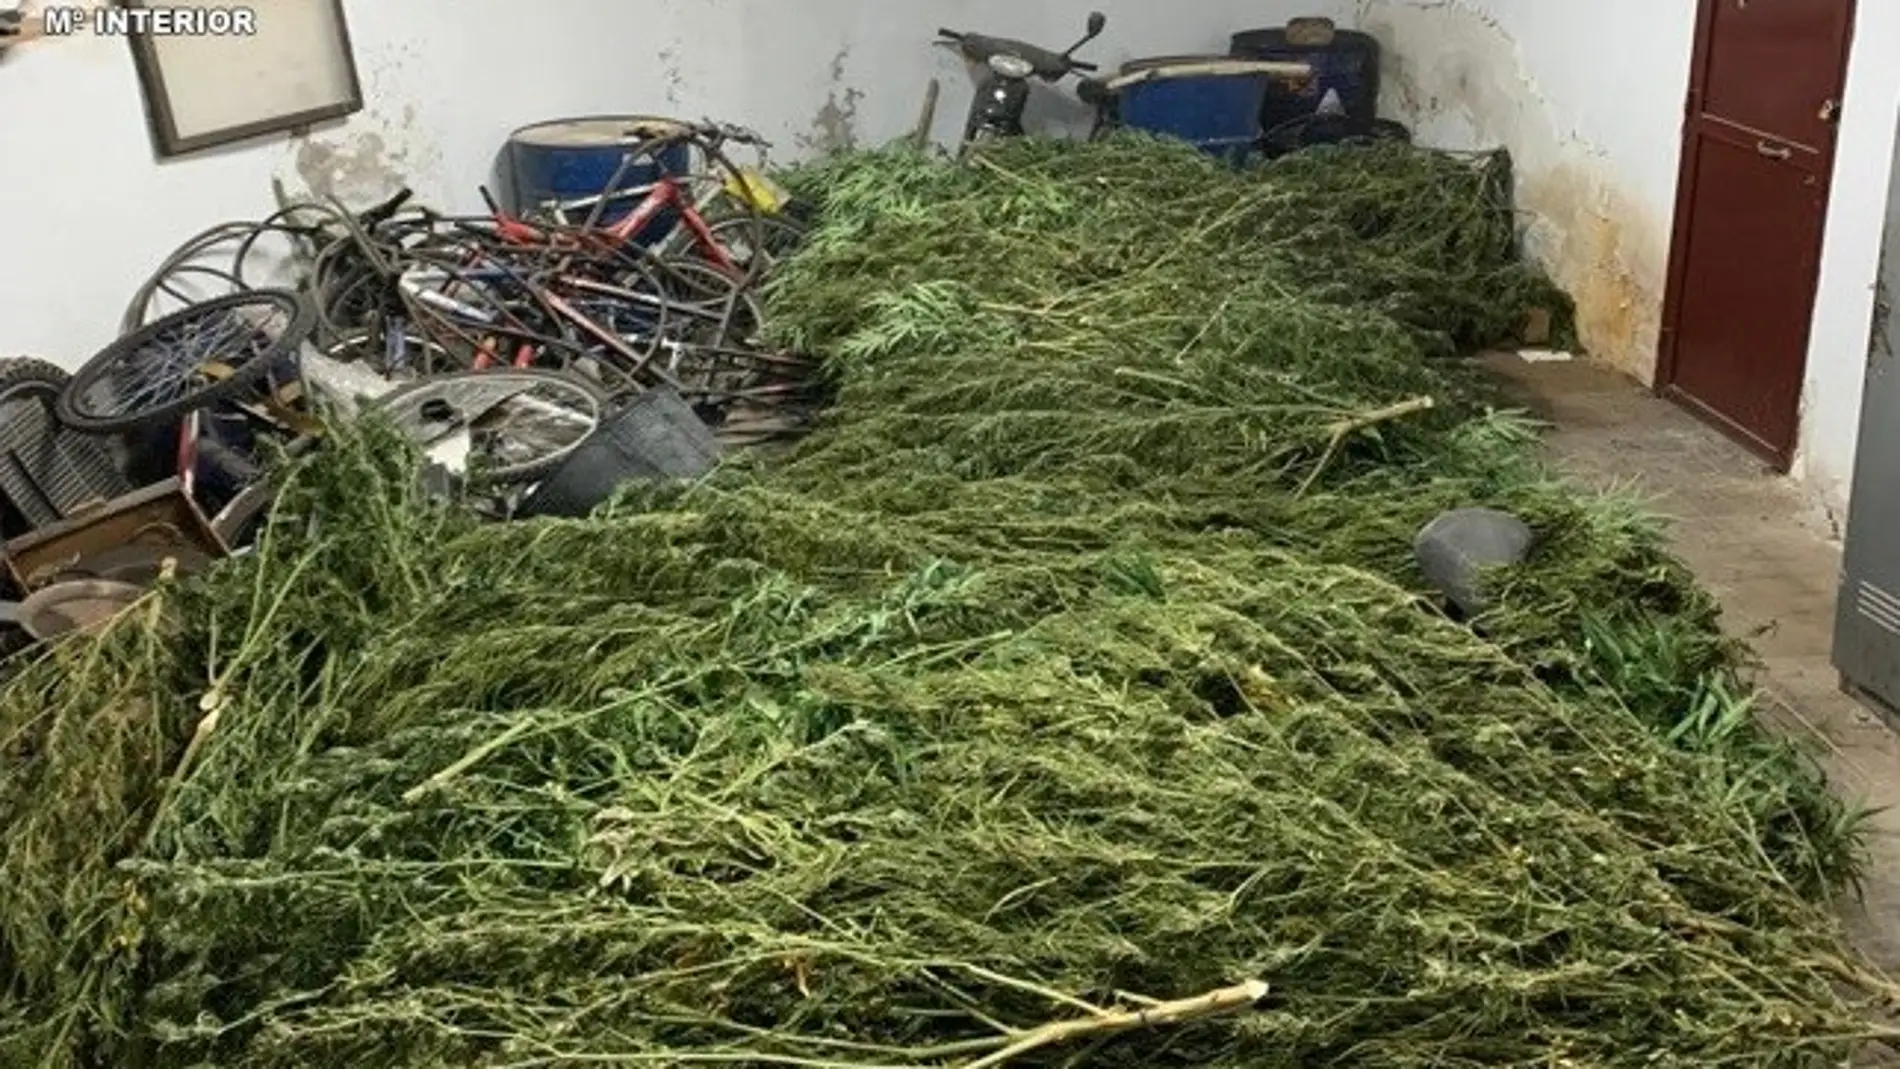 Plantas de marihuana aprehendidas por la Guardia Civil en La Solana